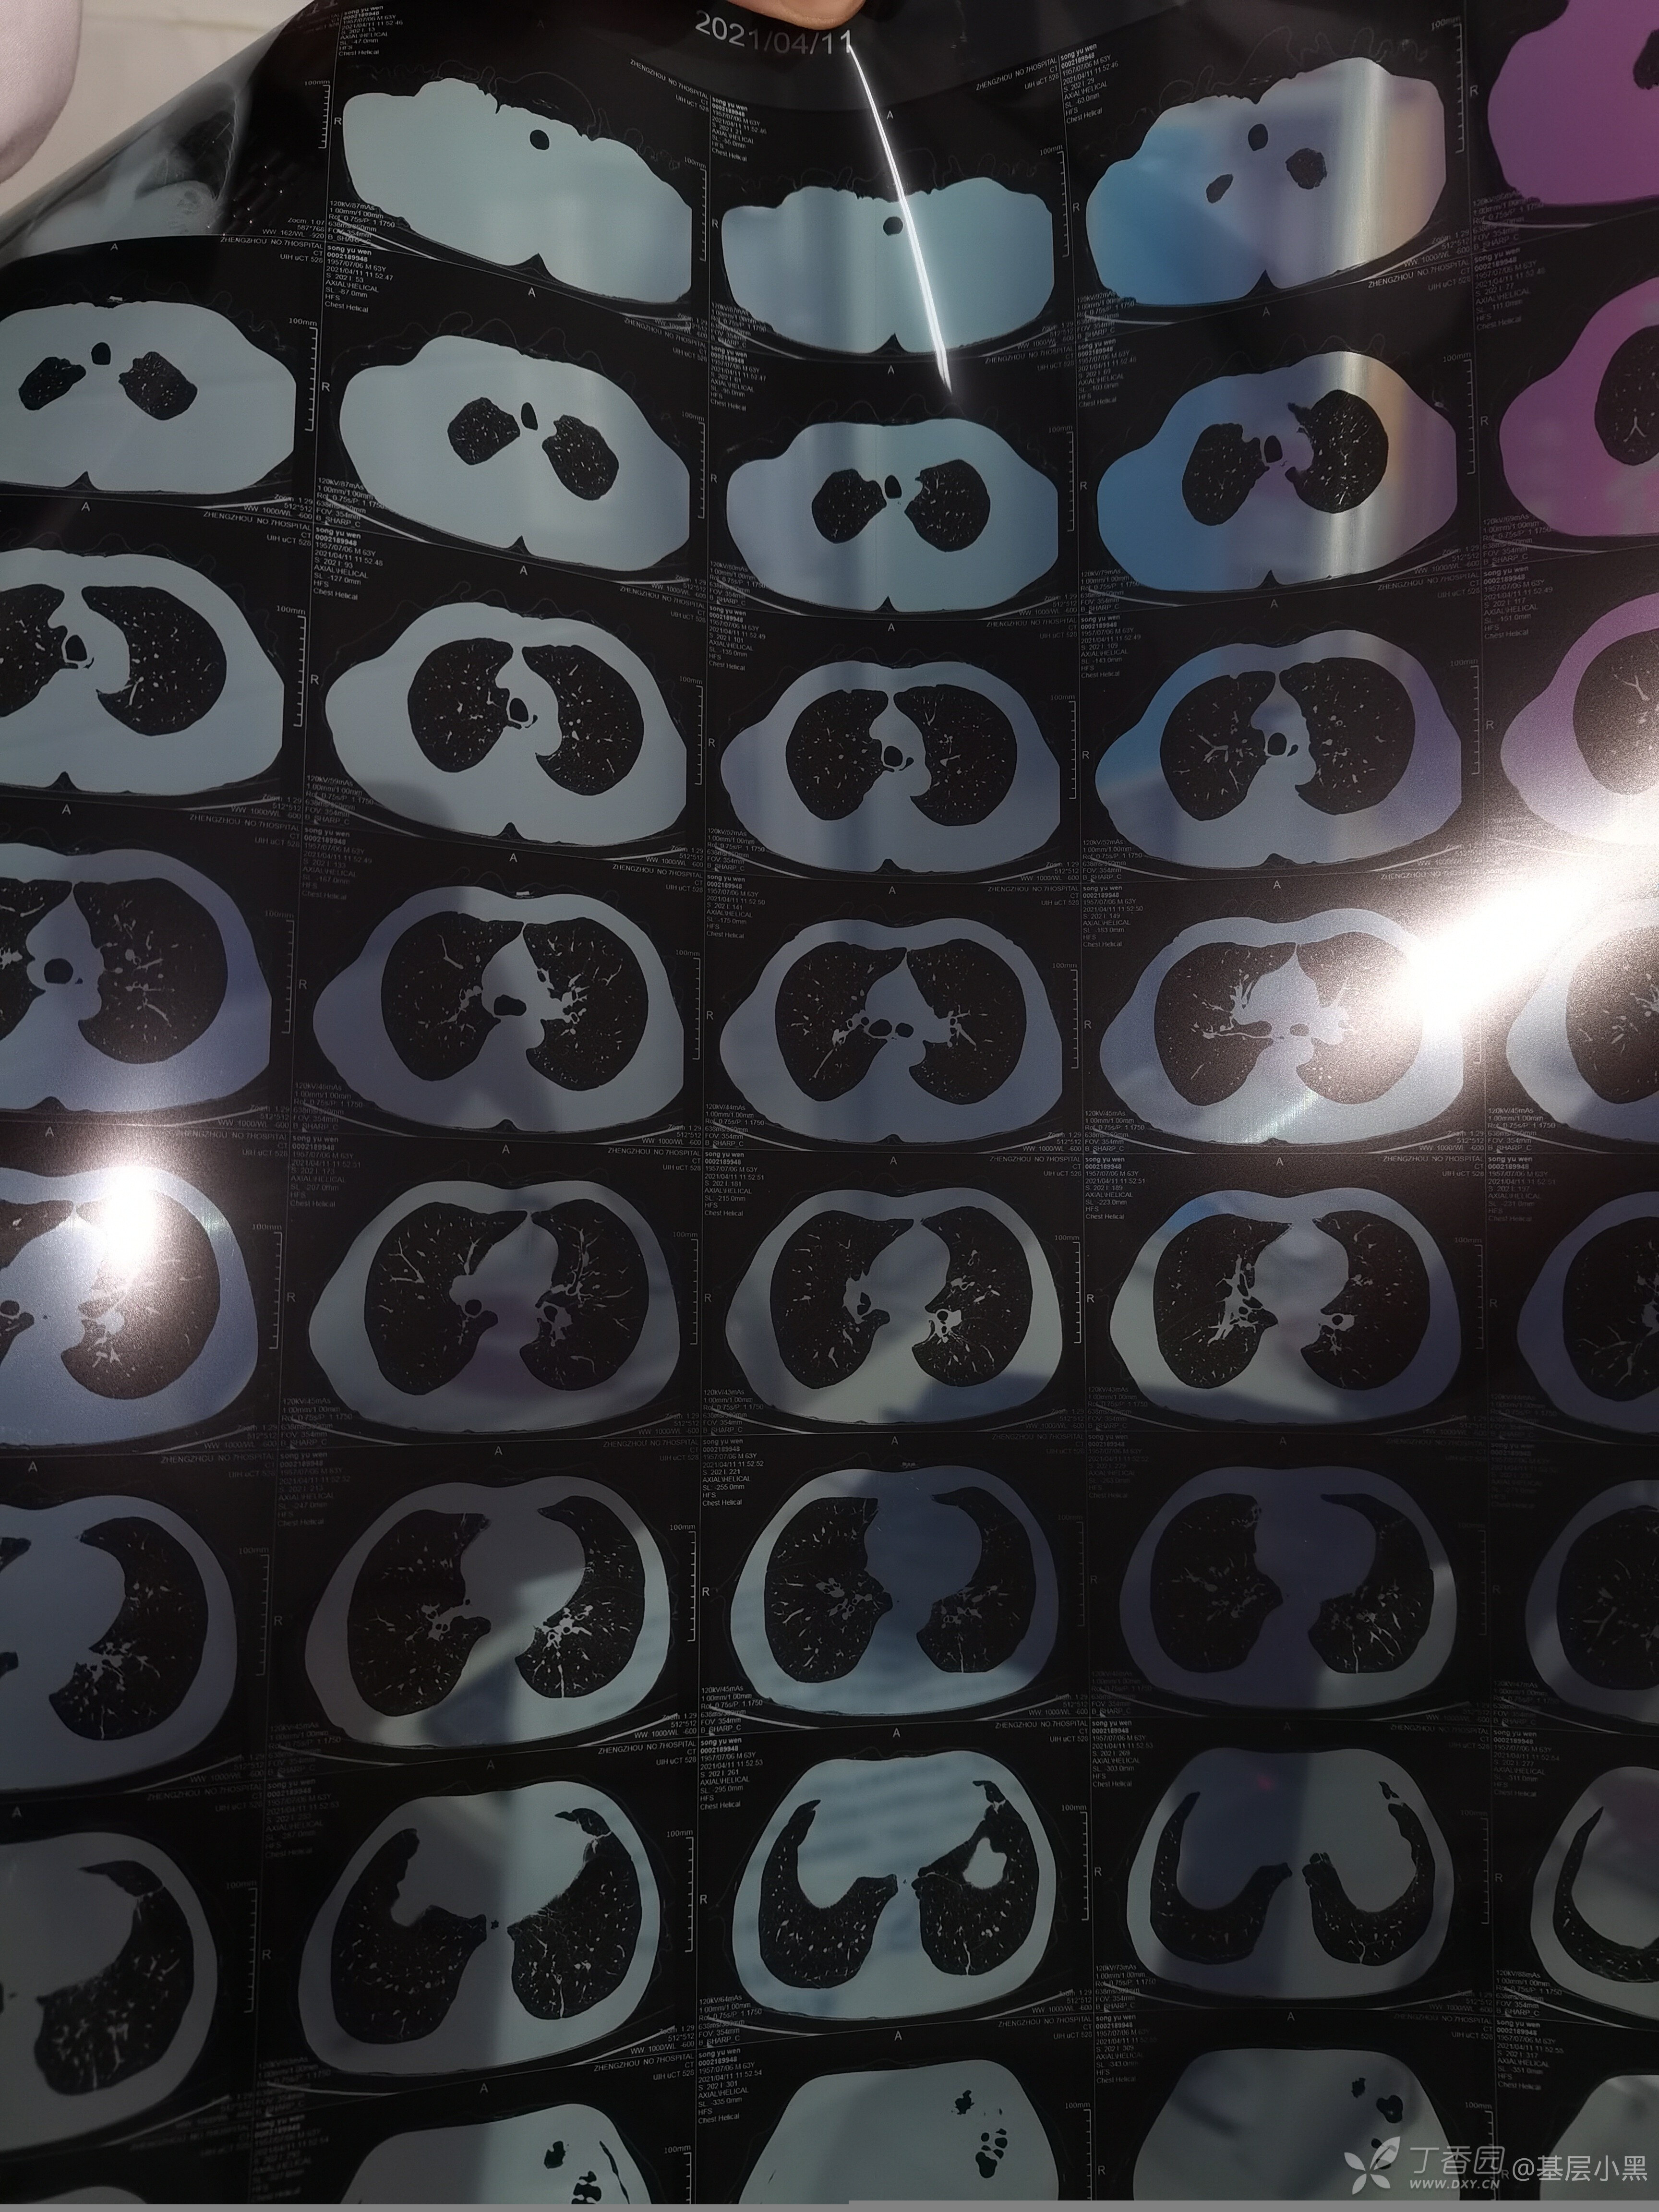 ct片子的照片过来,主要是要看你的肺窗的片子,也就是肺部是灰色的那